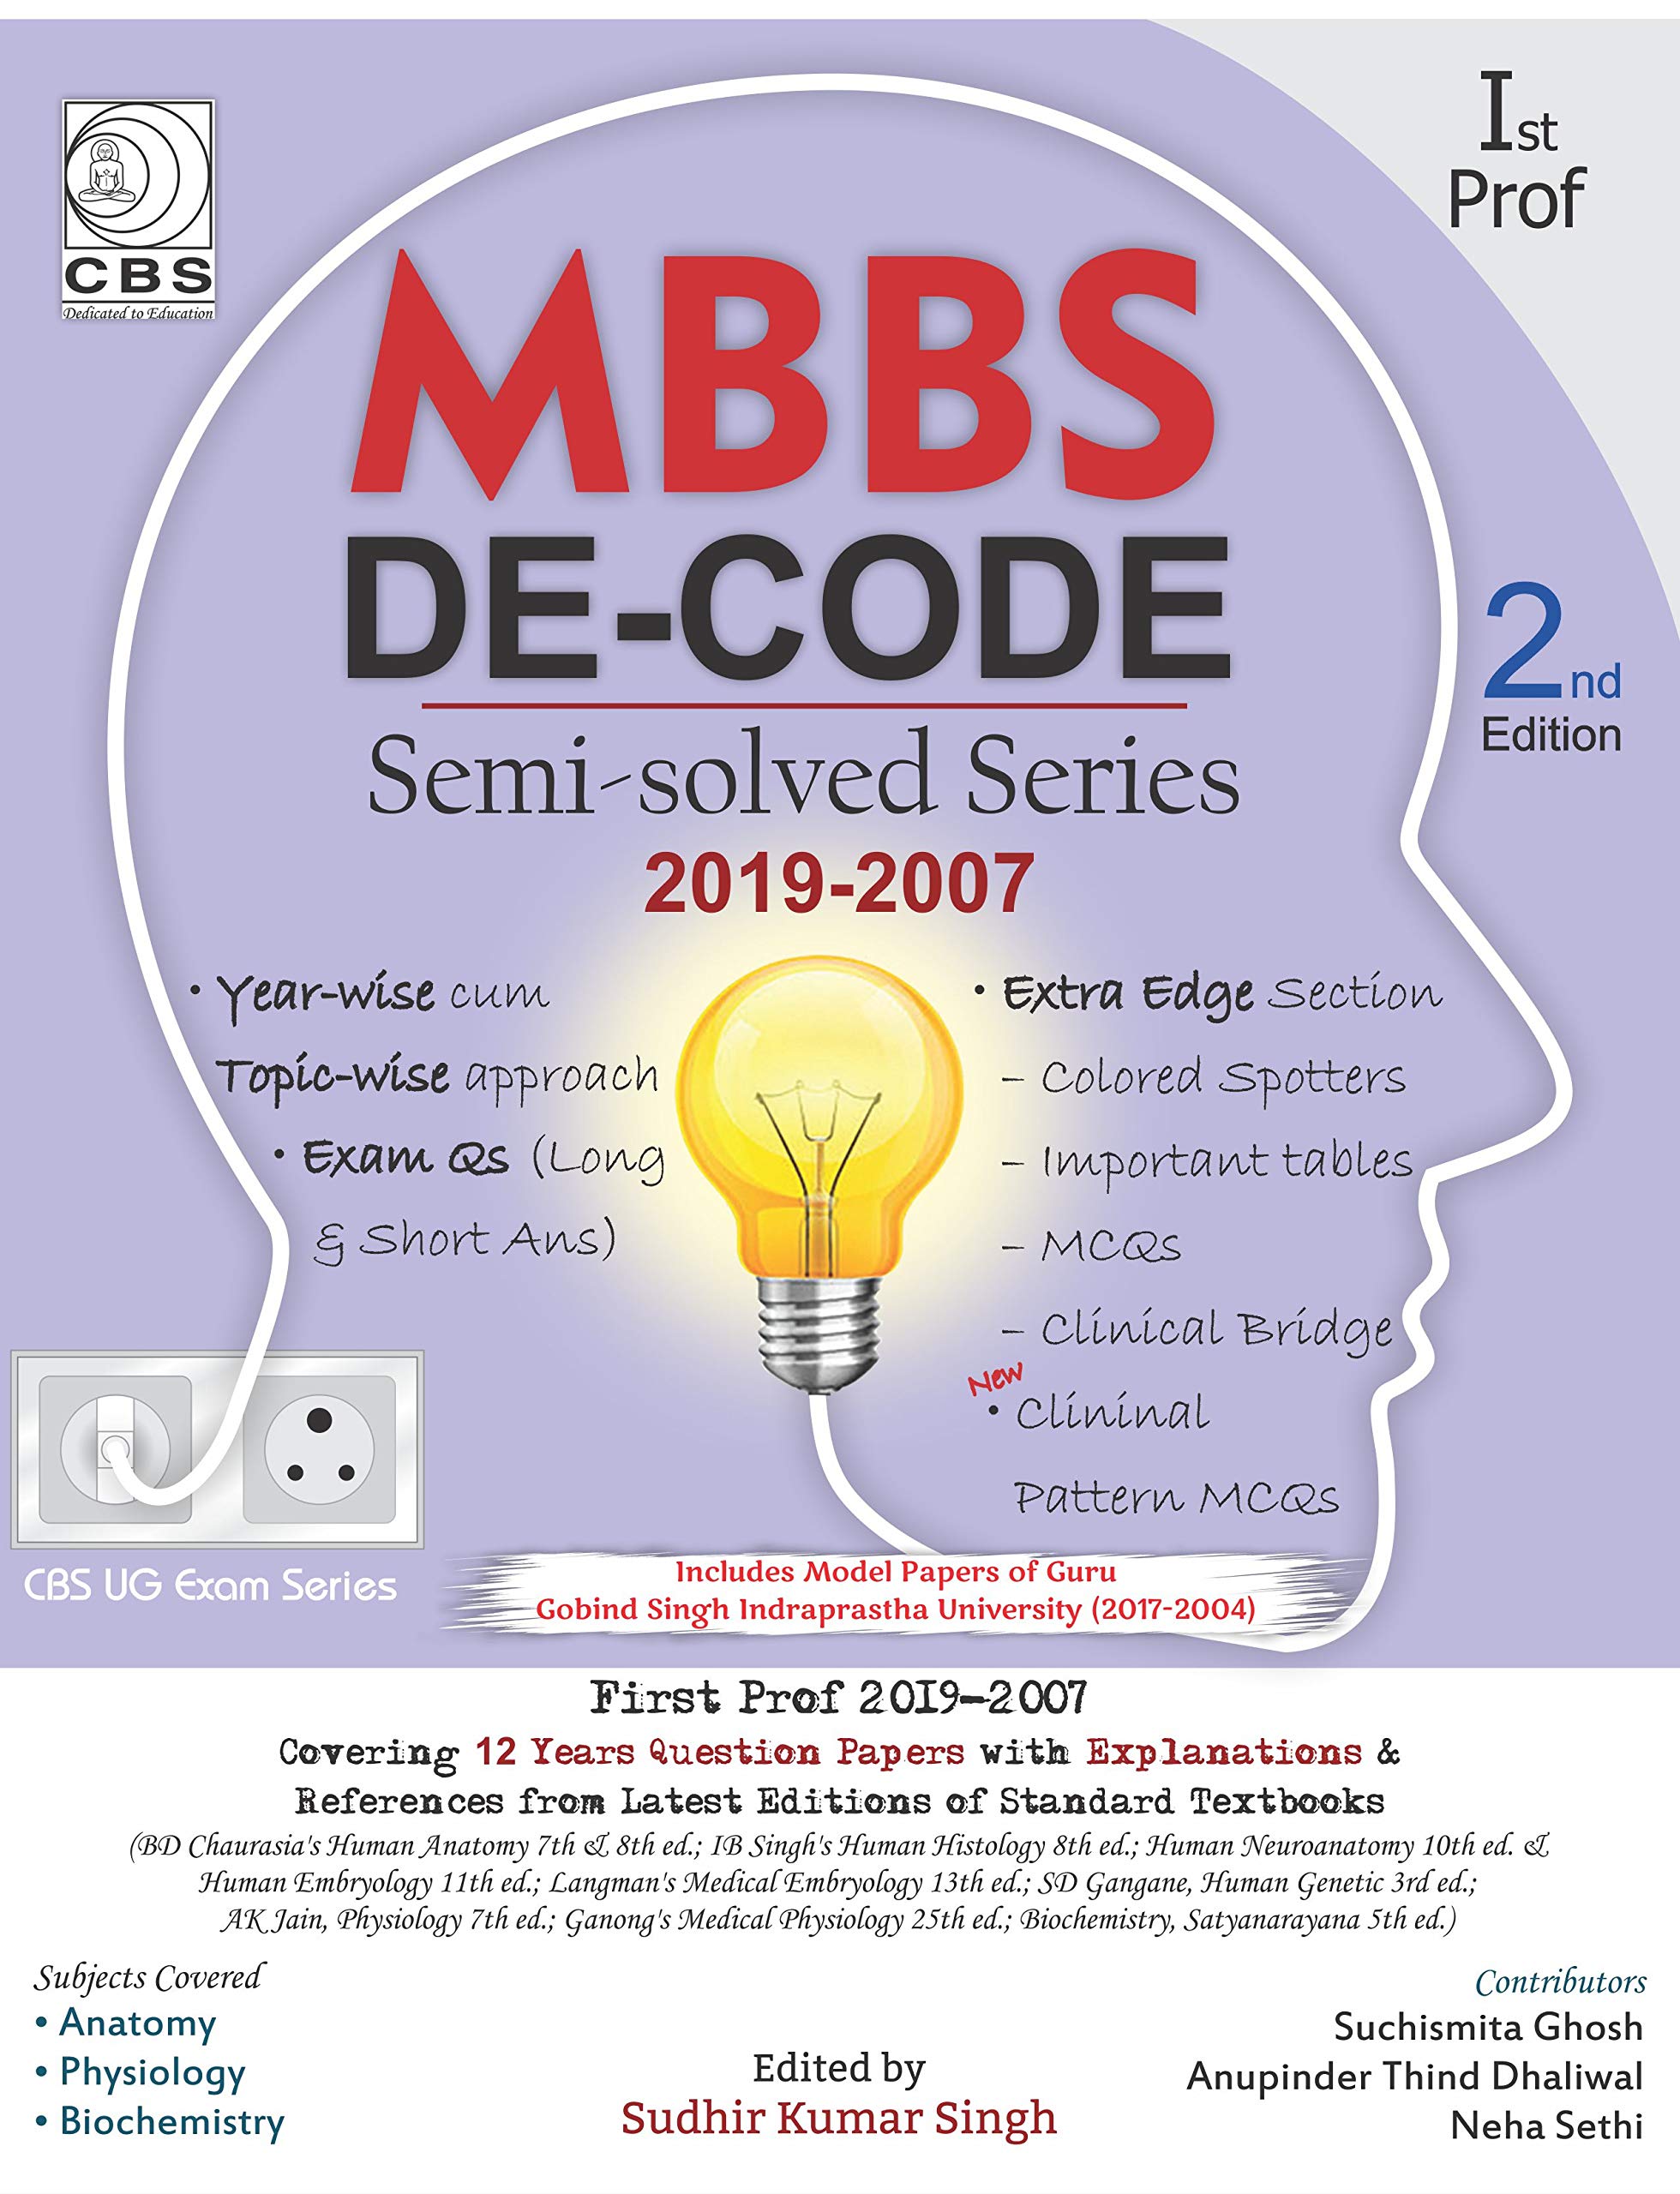 mbbs-decode-semi-solved-series-1st-prof-delhi-university